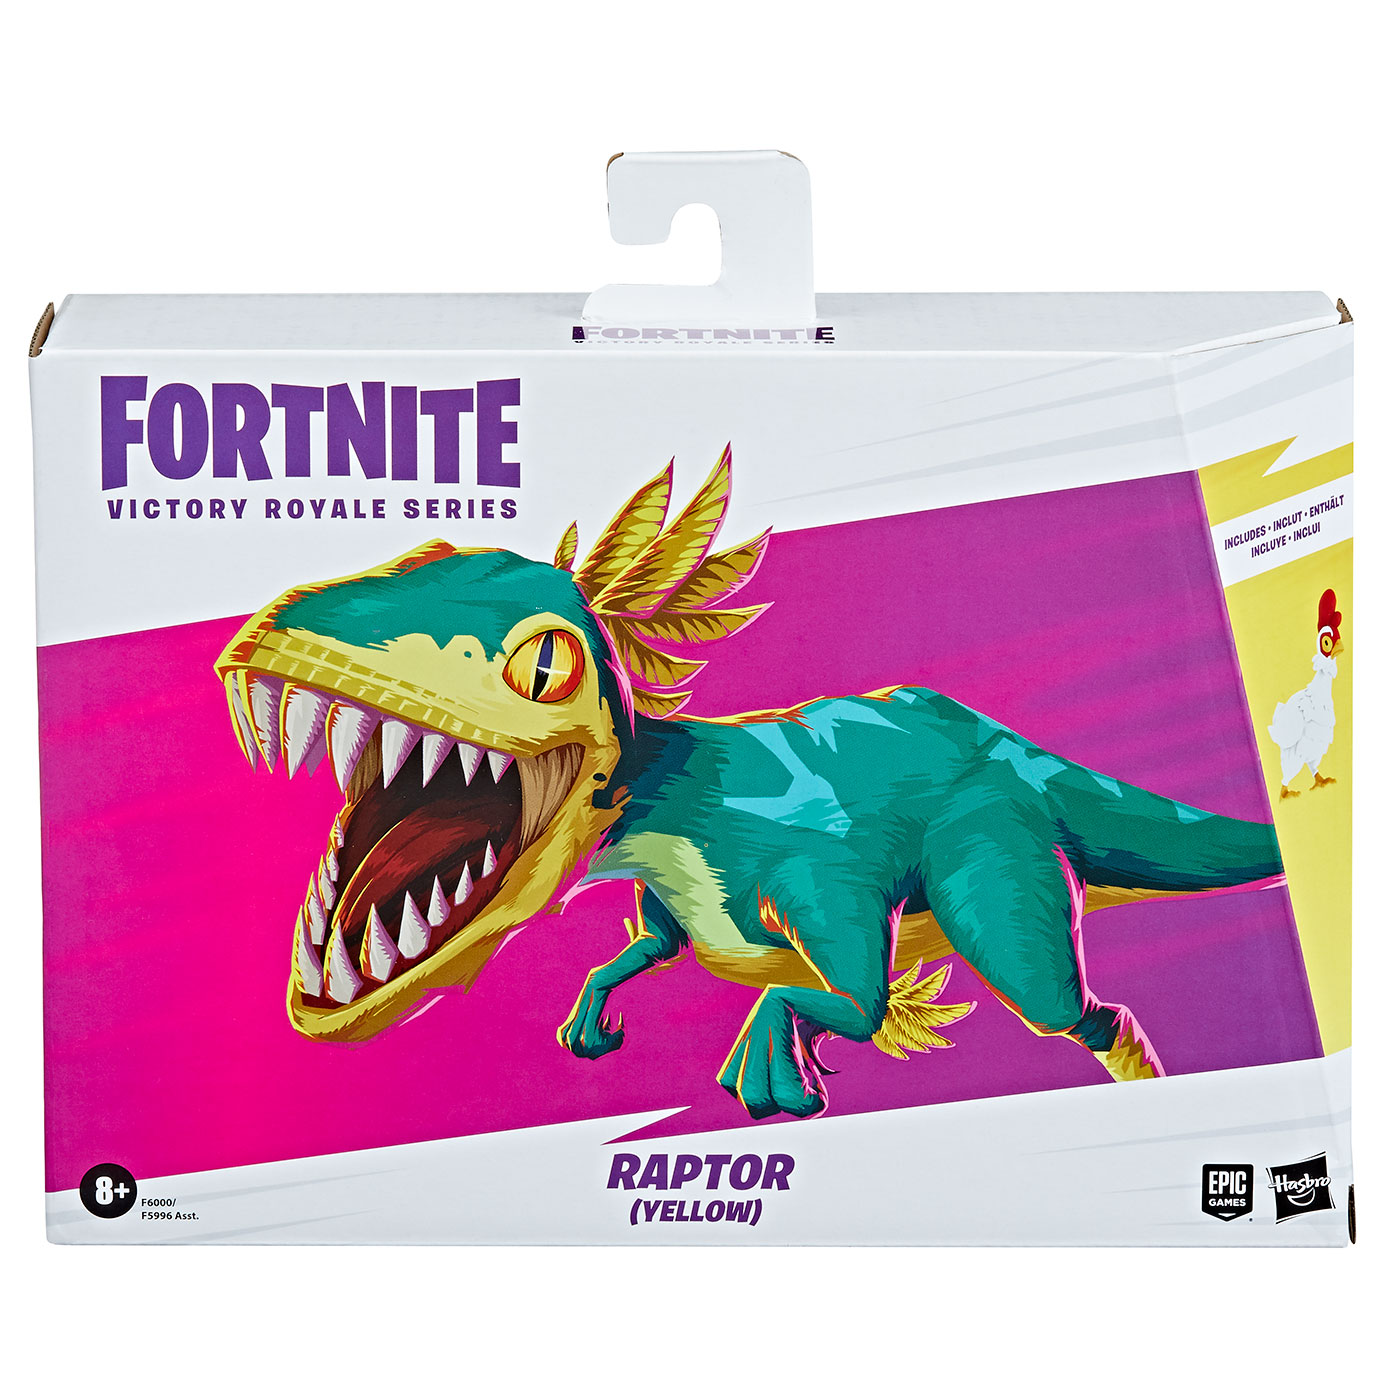 Fortnite Victory Royale Creature Raptor Yellow画像